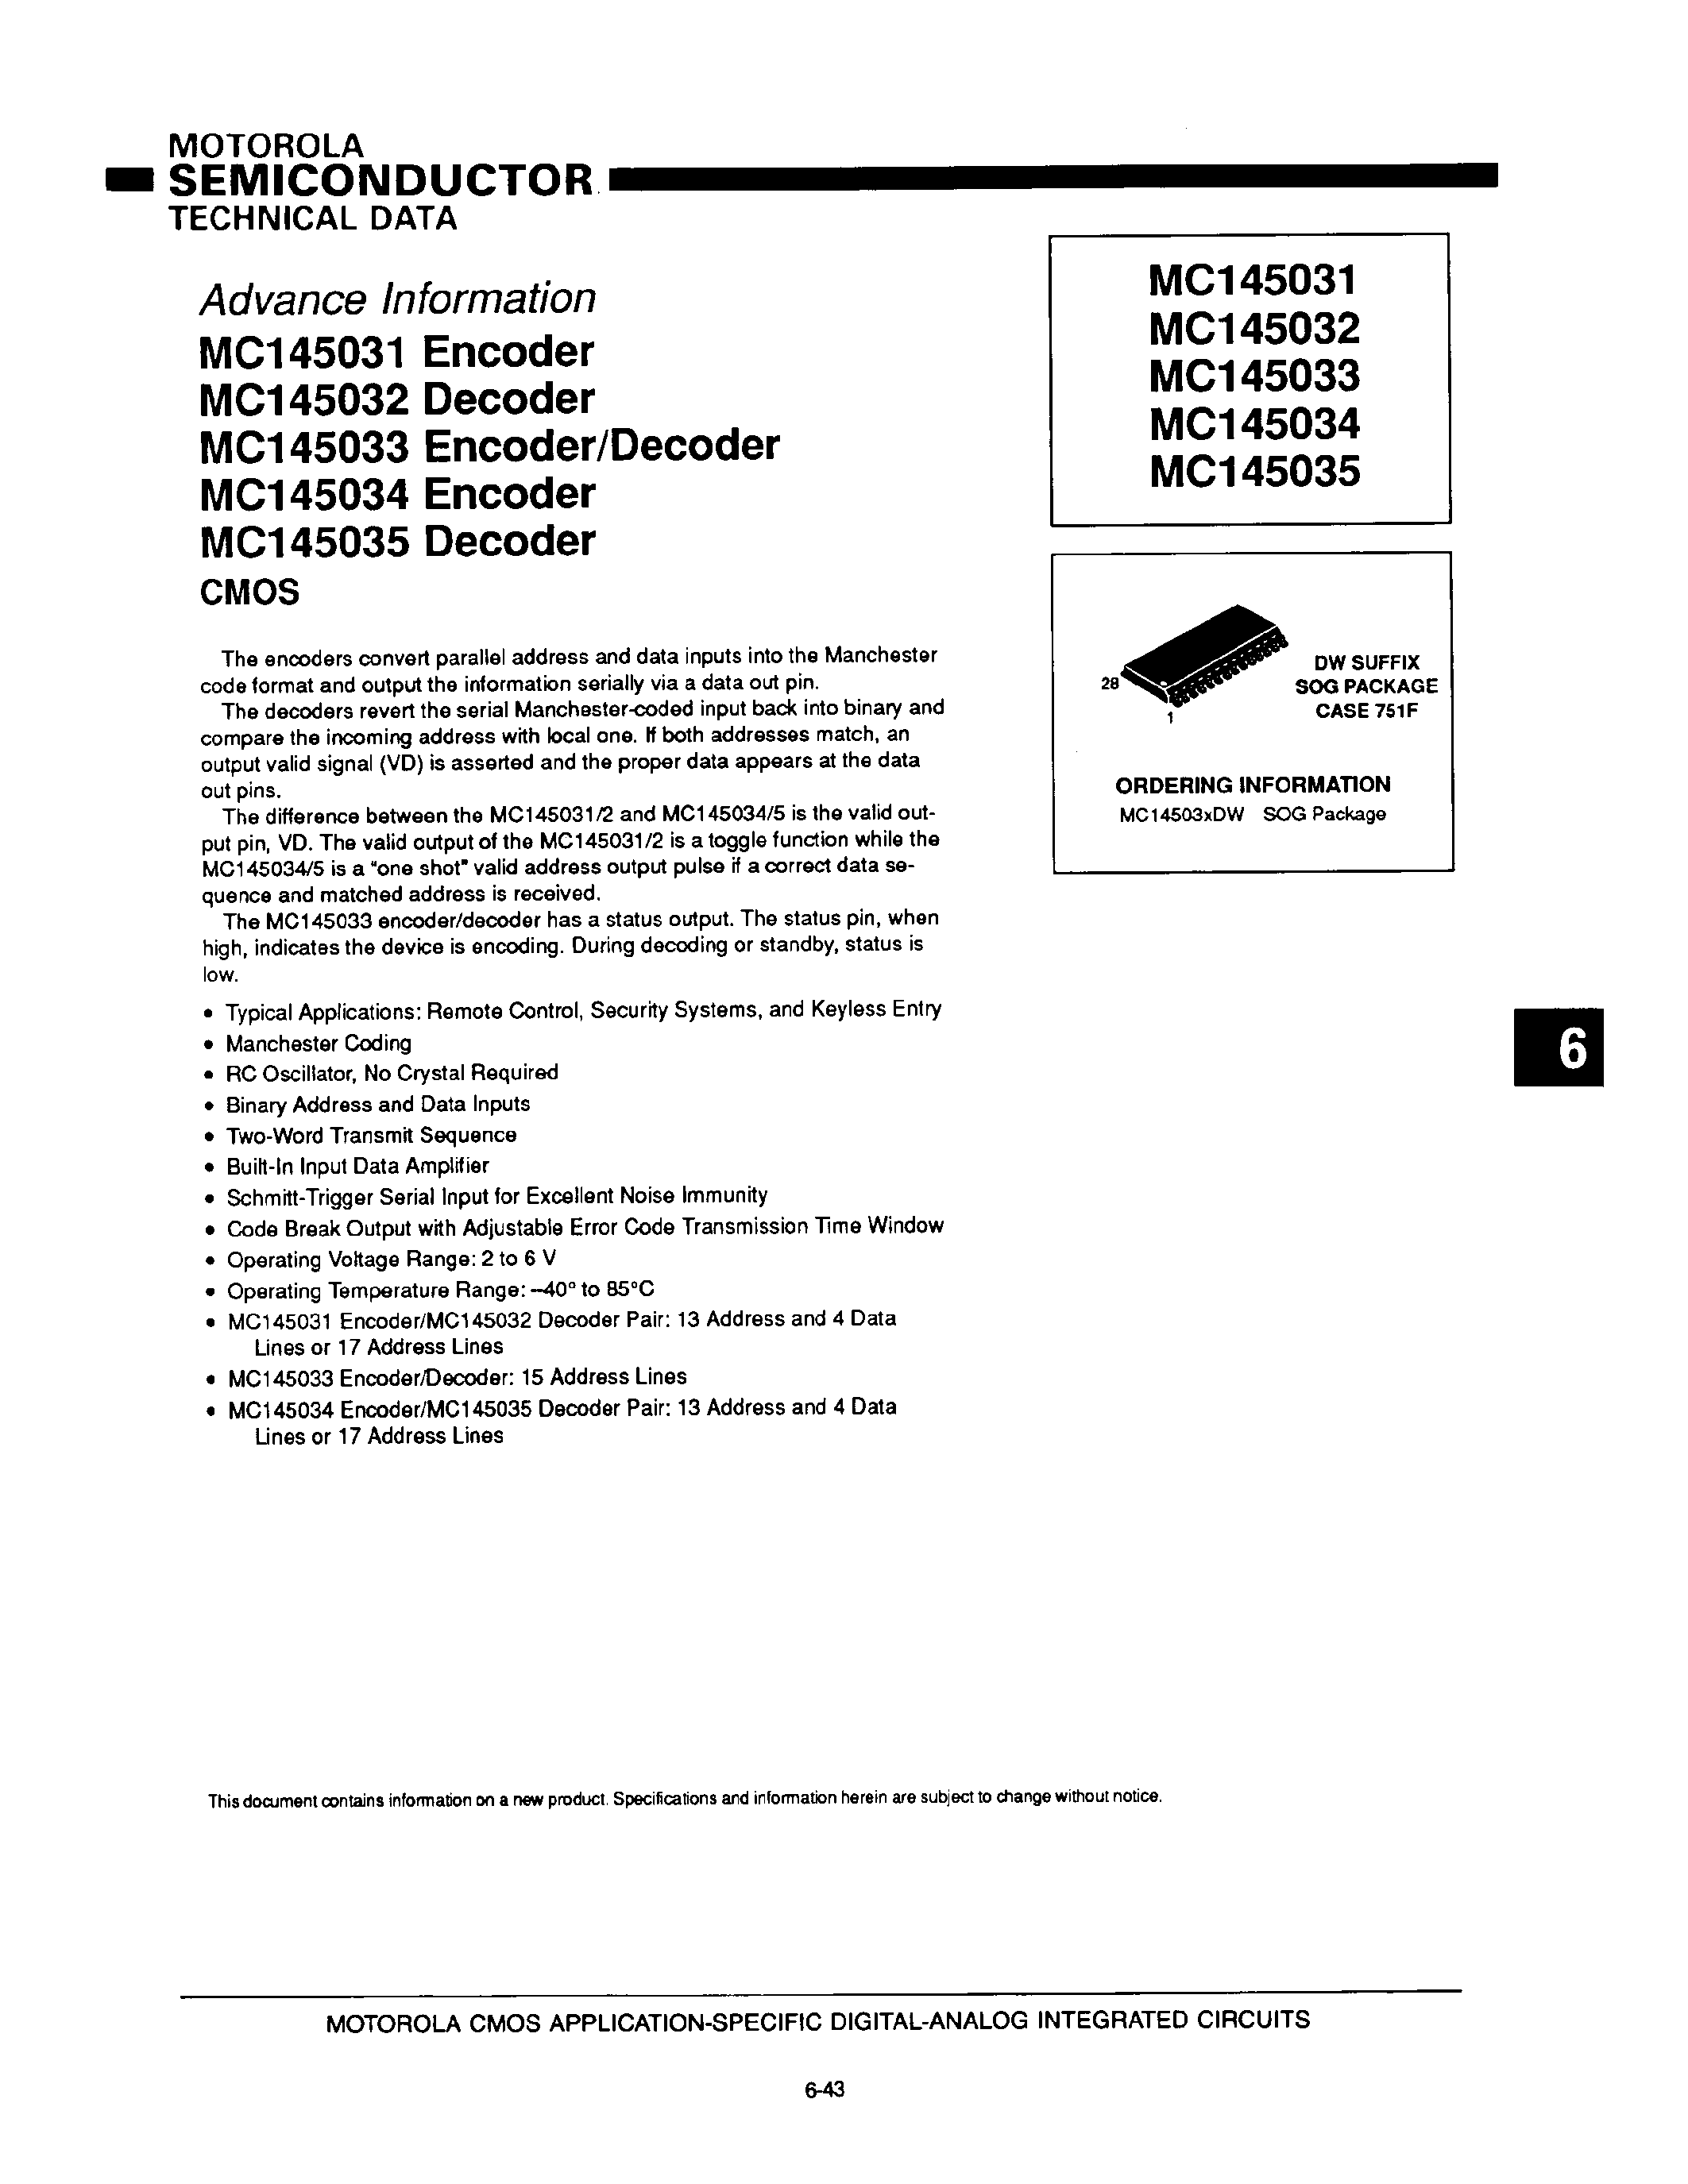 Datasheet MC145031 - (MC145031 - MC145035) DW SUFFIX SOG PACKAGE CASE 751F page 1